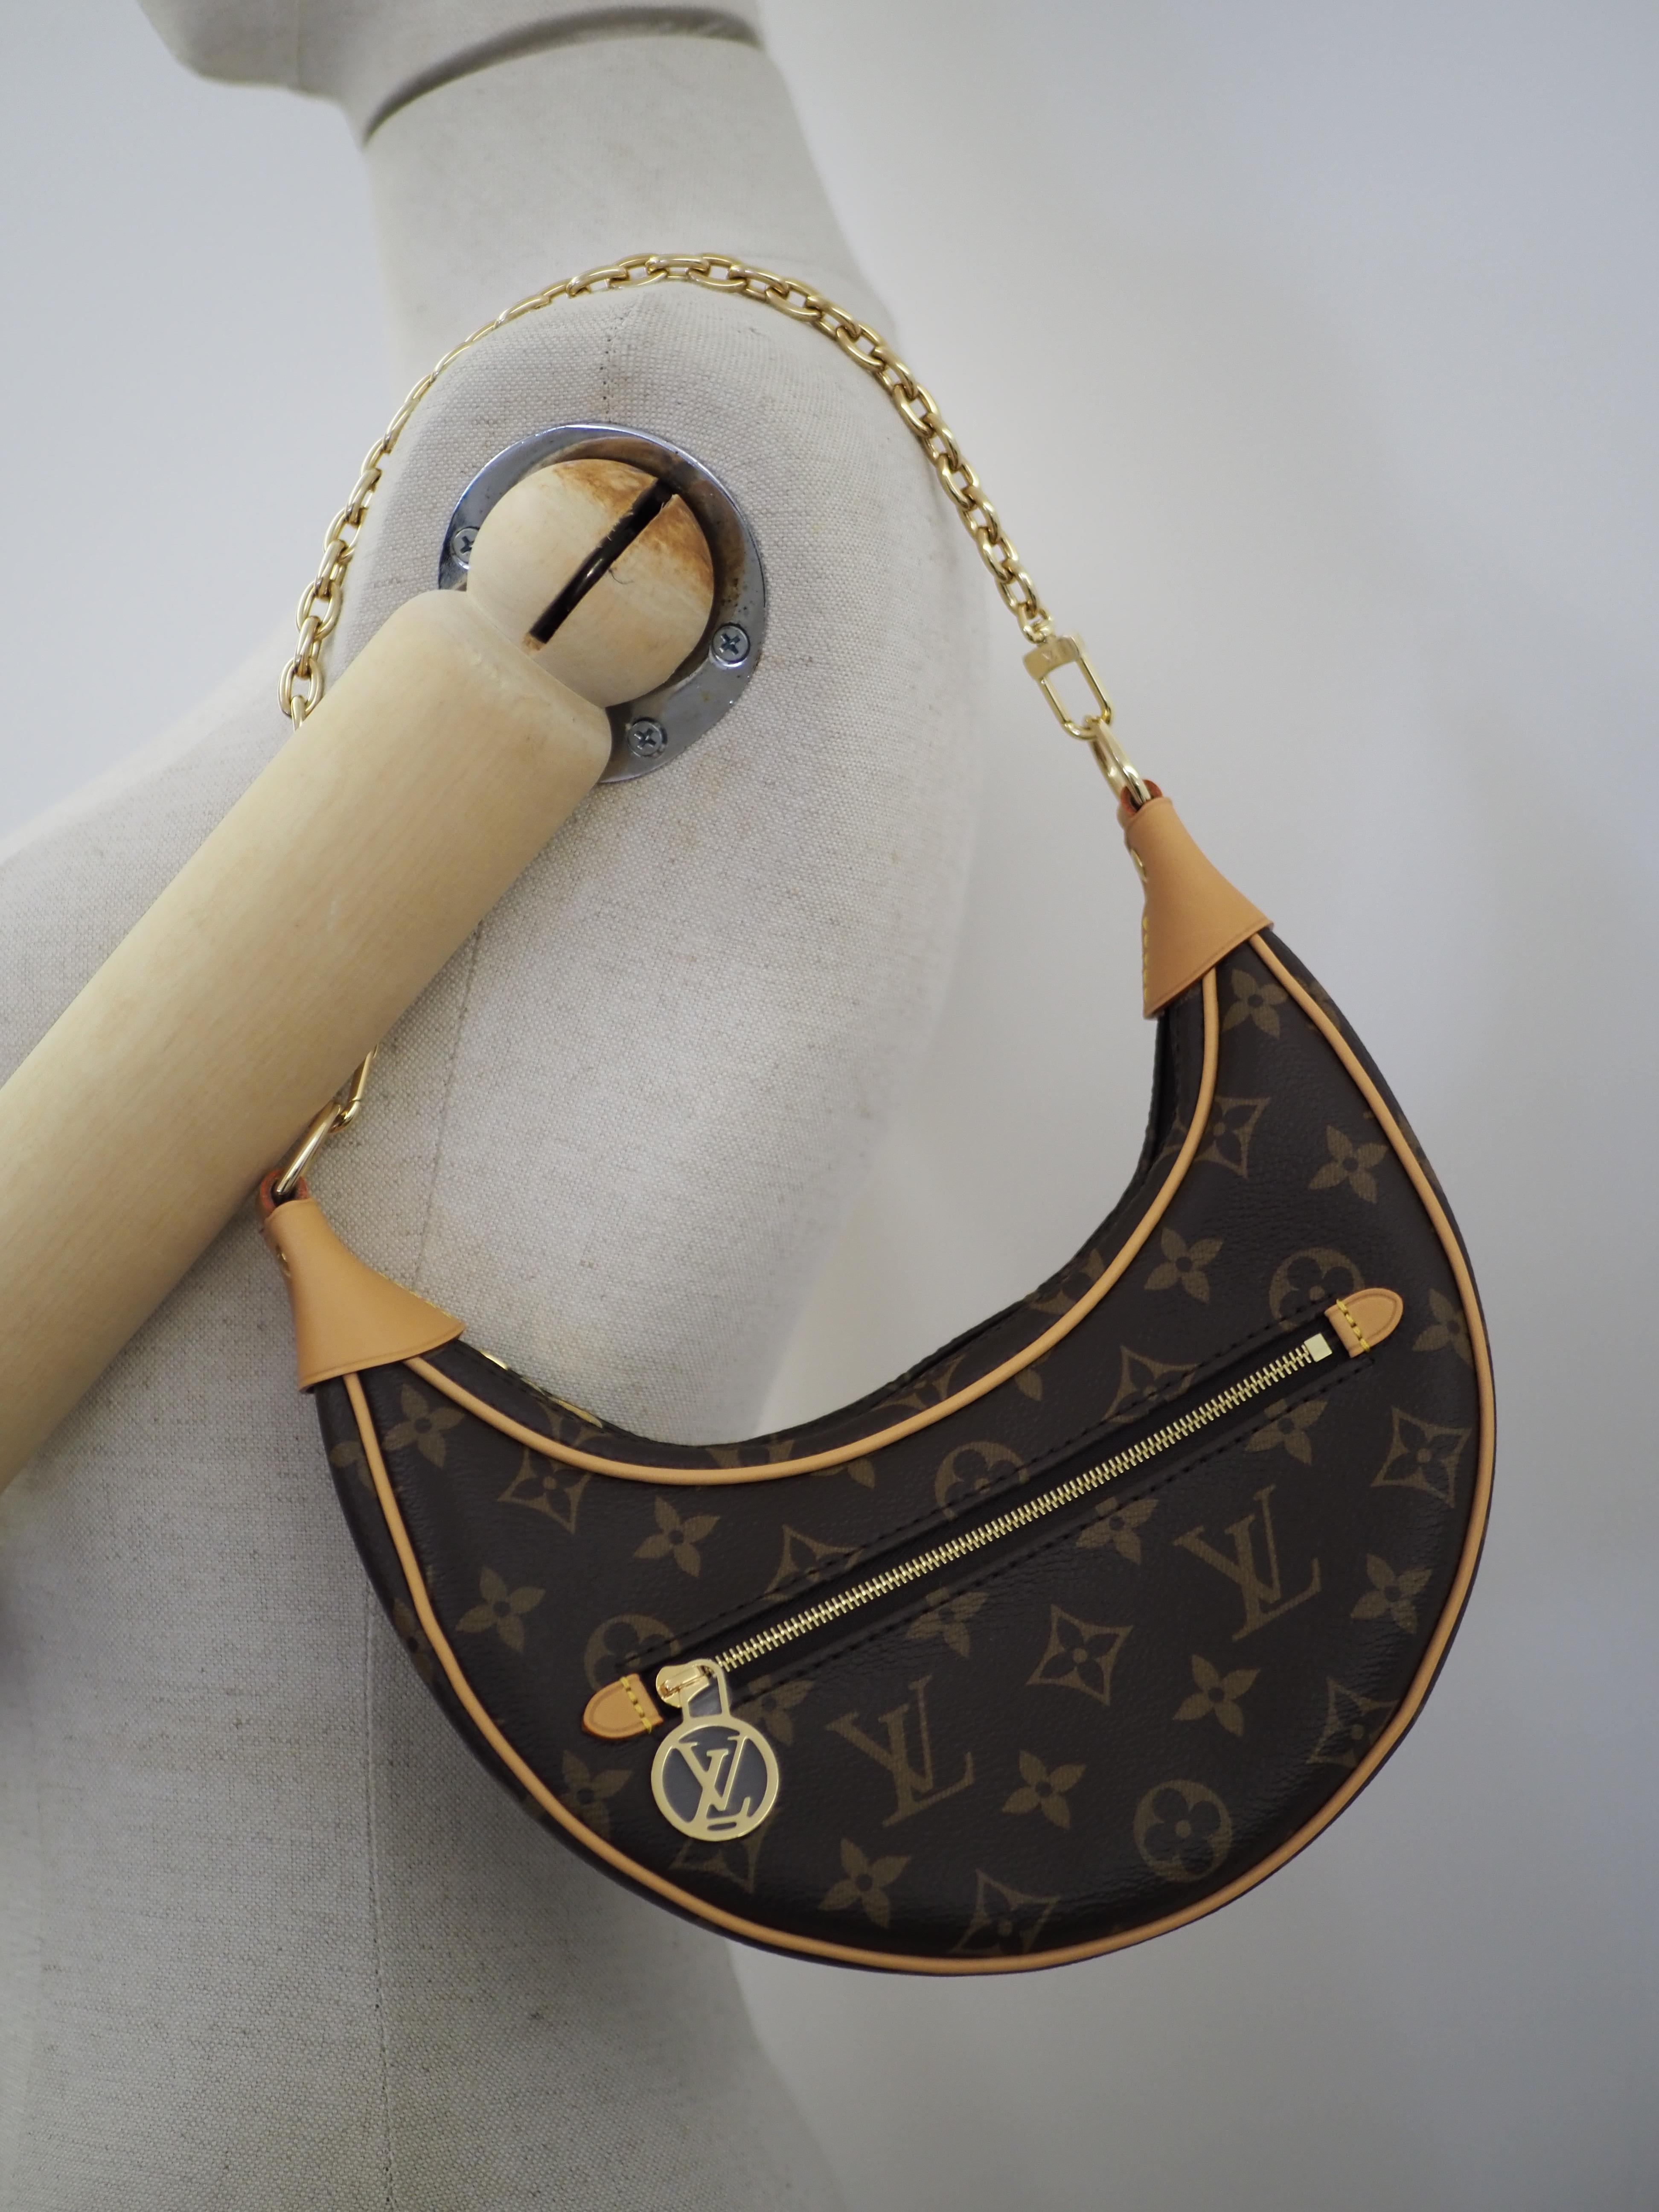 Louis Vuitton Loop baguette handbag shoulder bag NWOT 1